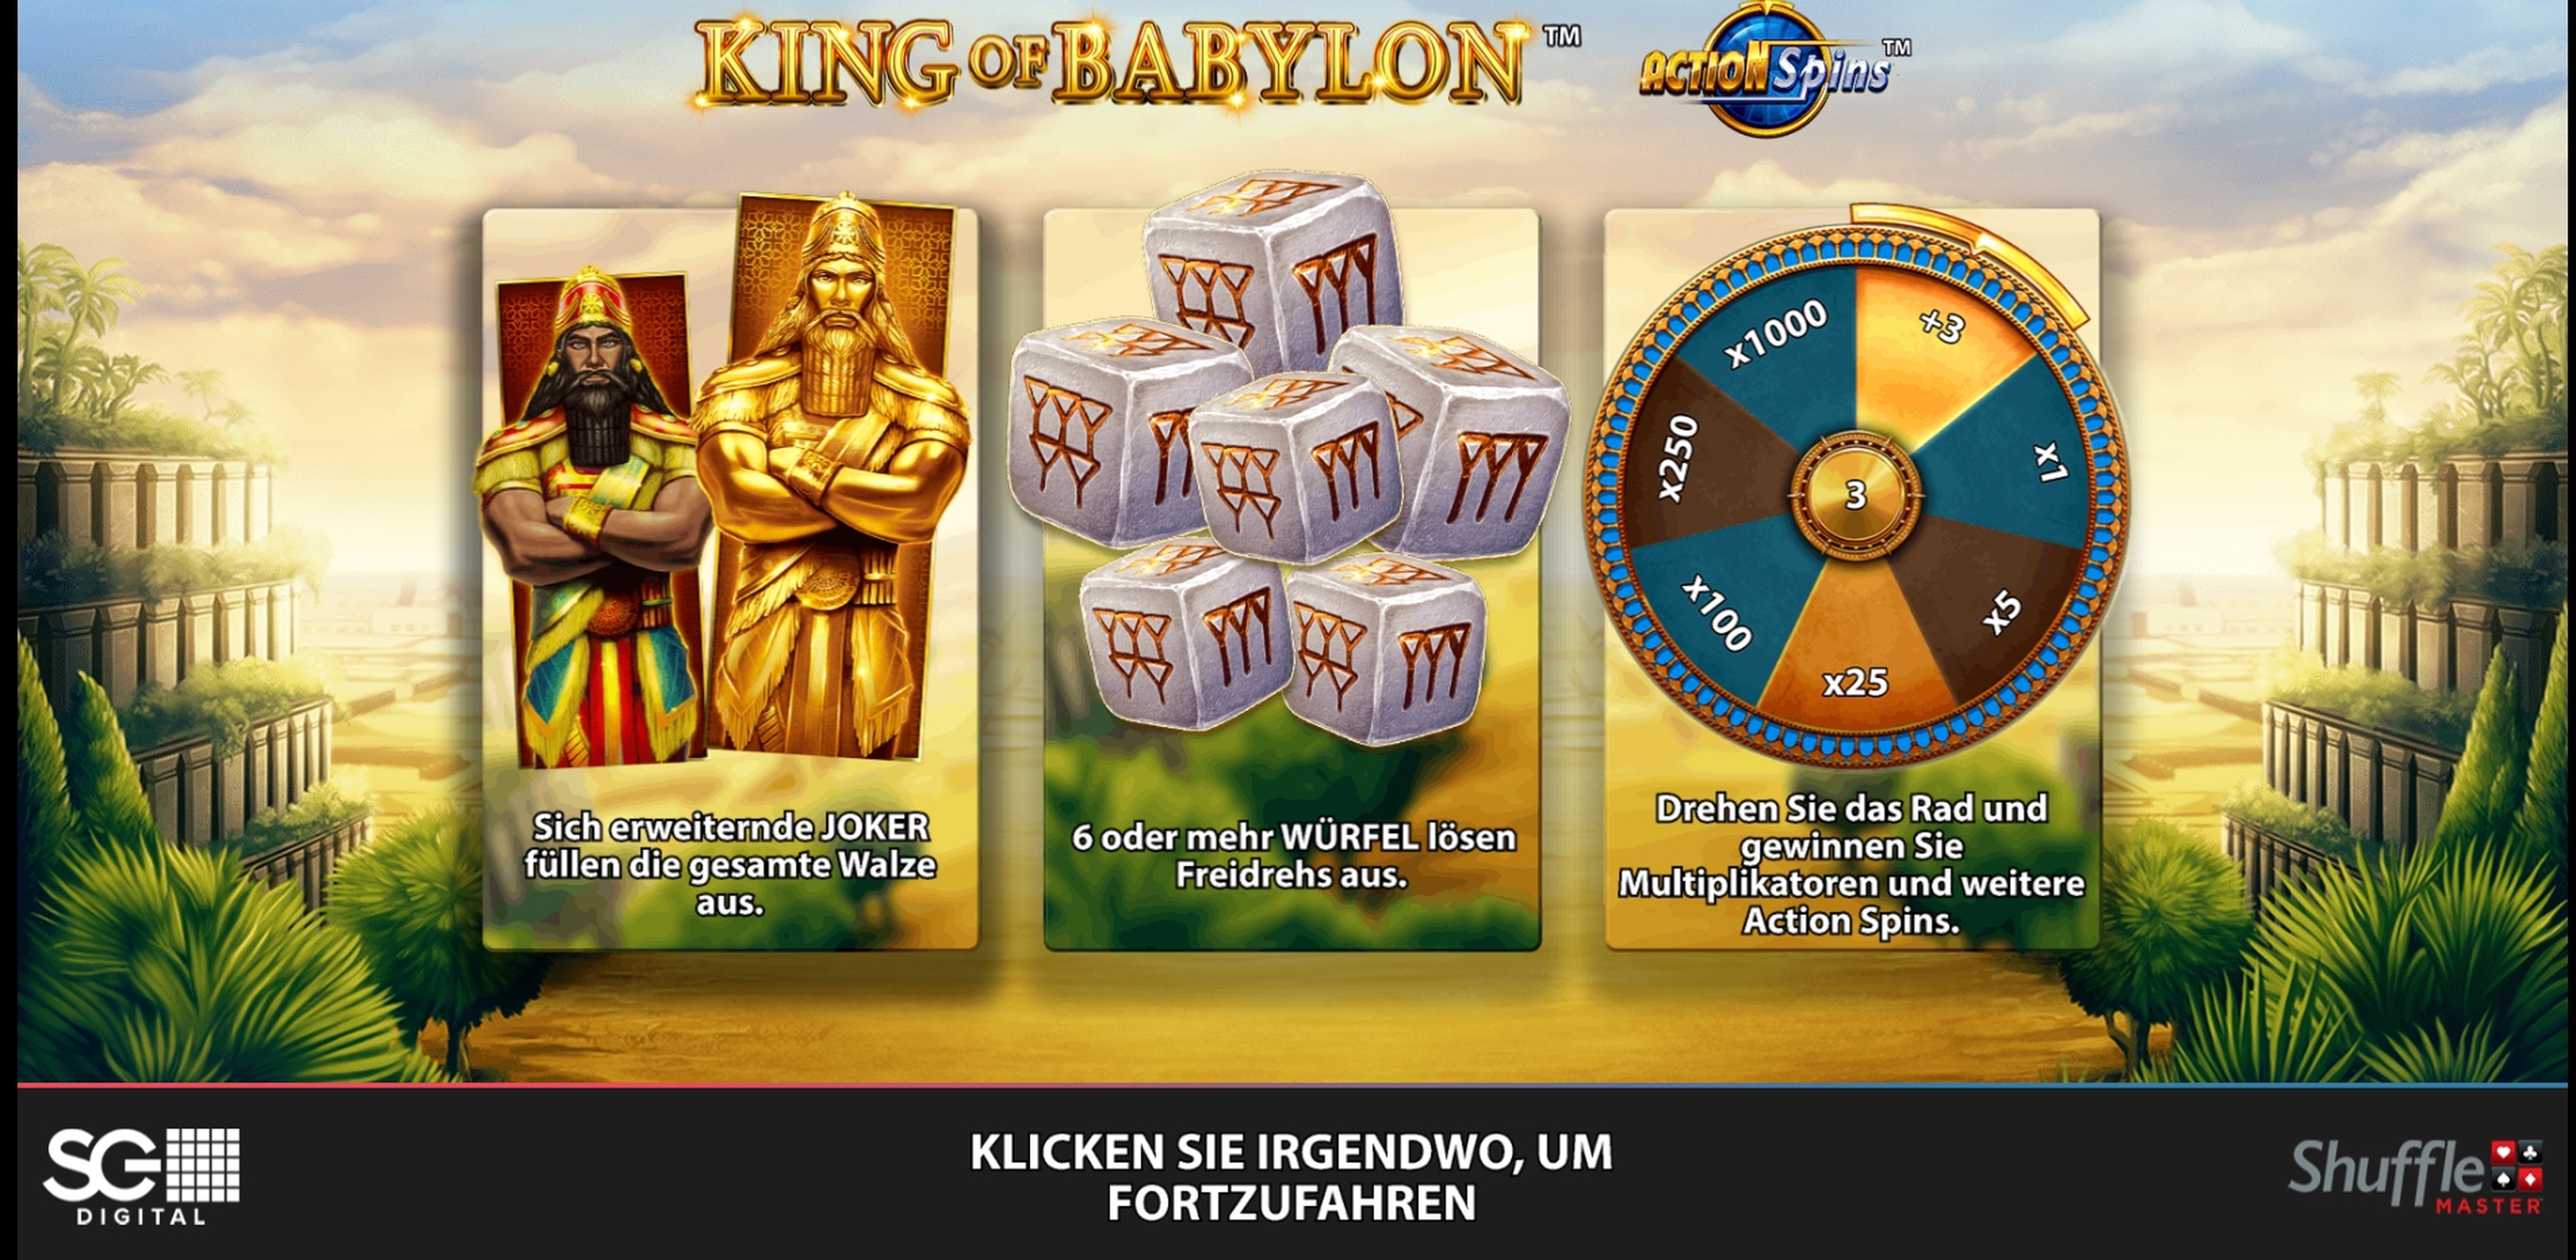 Play King of Babylon Free Casino Slot Game by Shuffle Master